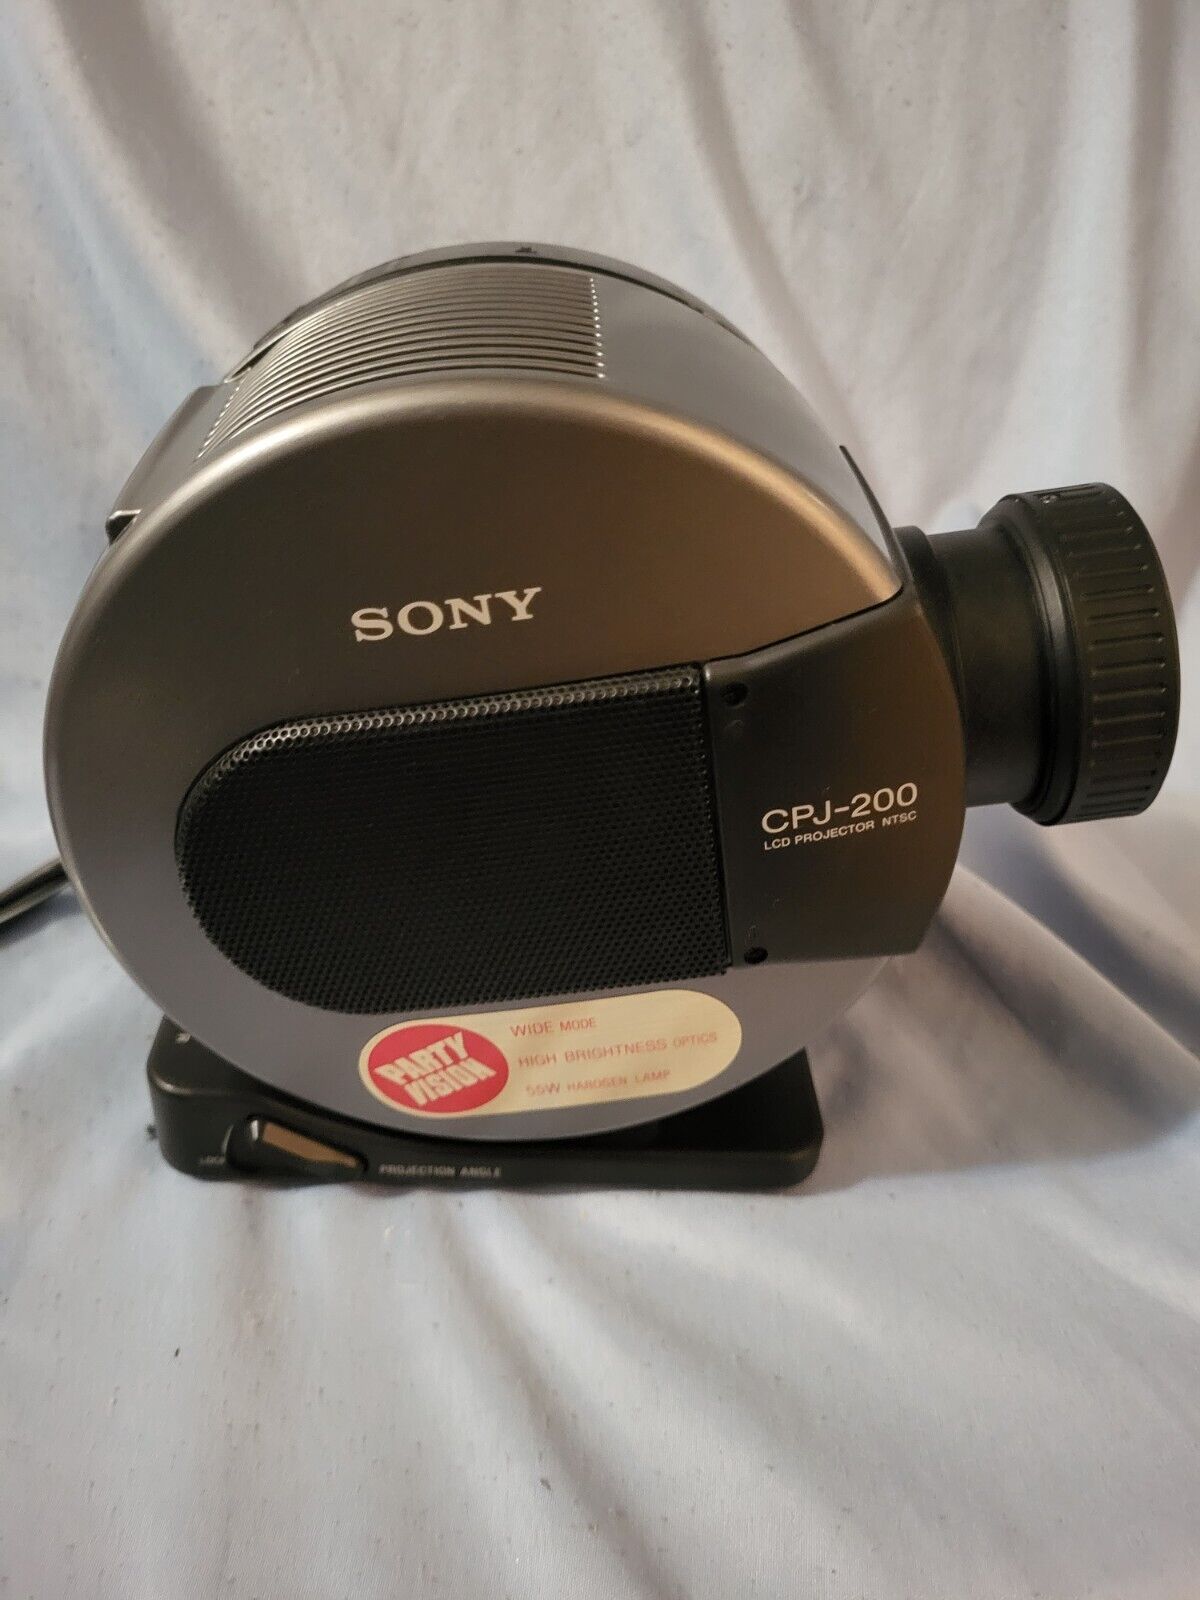 Rare Vintage Sony CPJ-200 projector